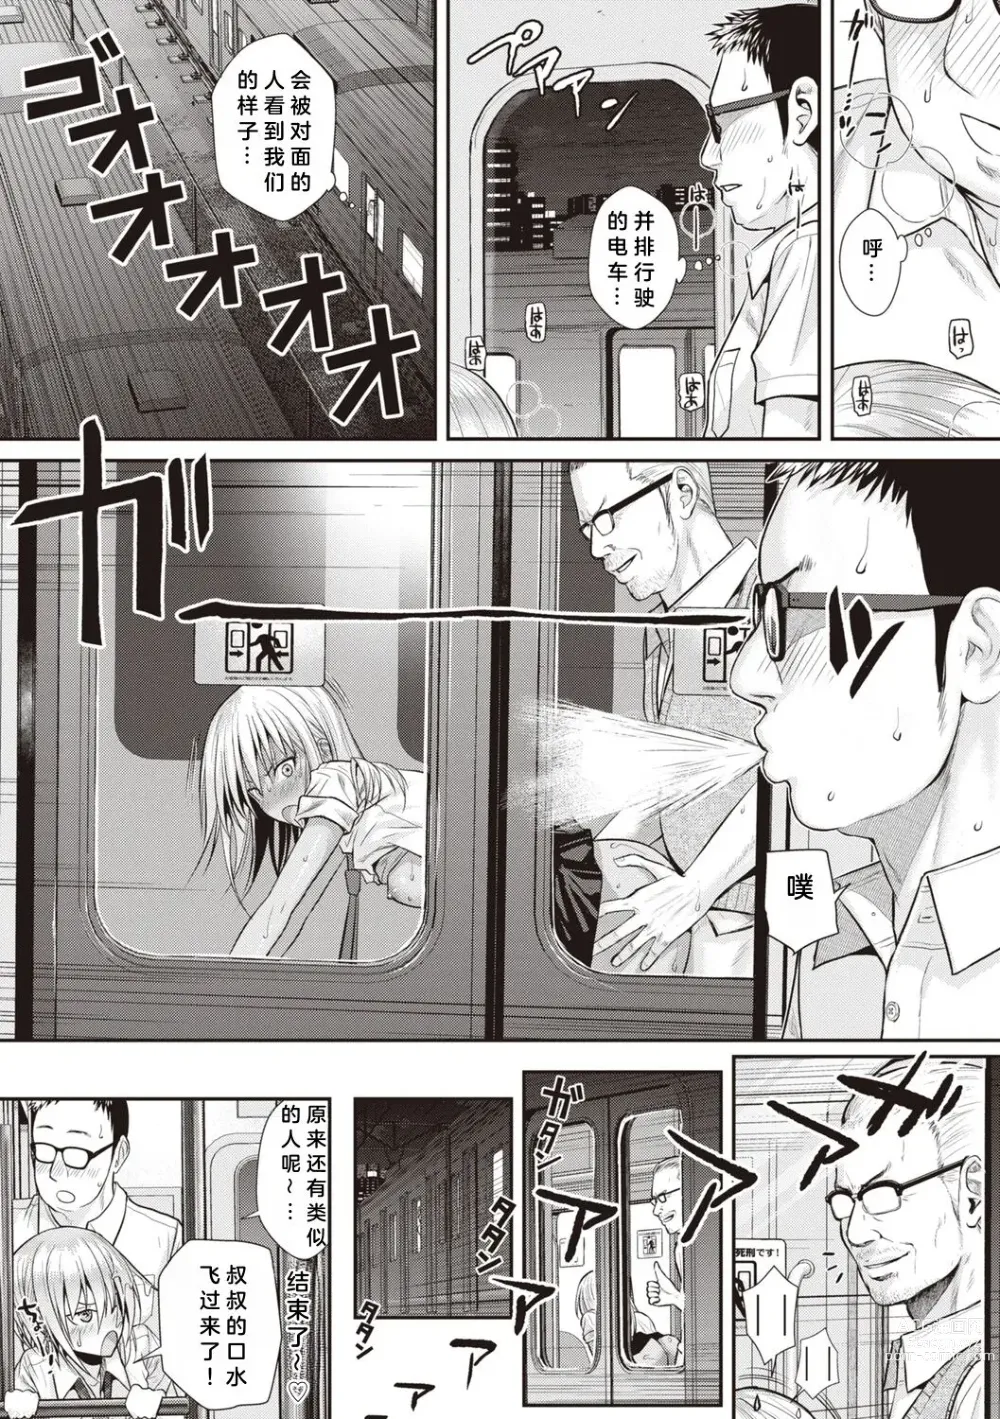 Page 9 of manga Prototype Teens